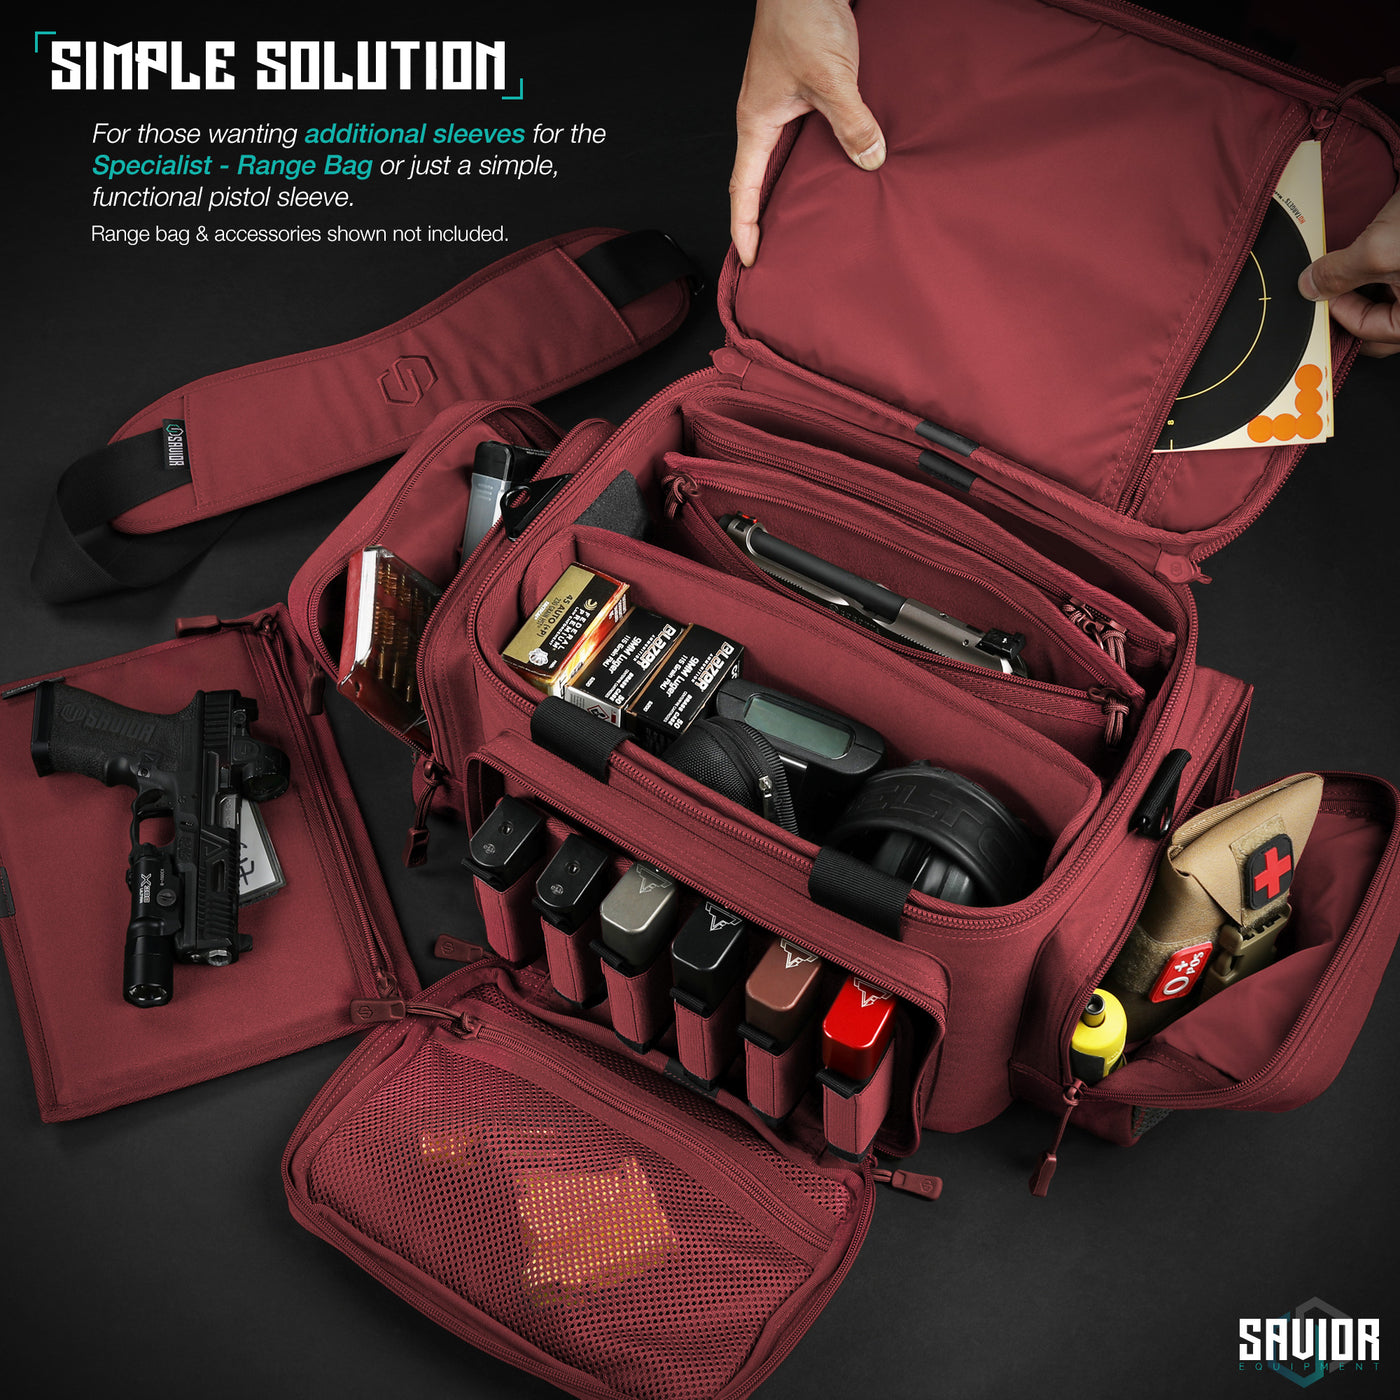 Pistol Sleeve For Specialist - Range Bag - 3 Pack